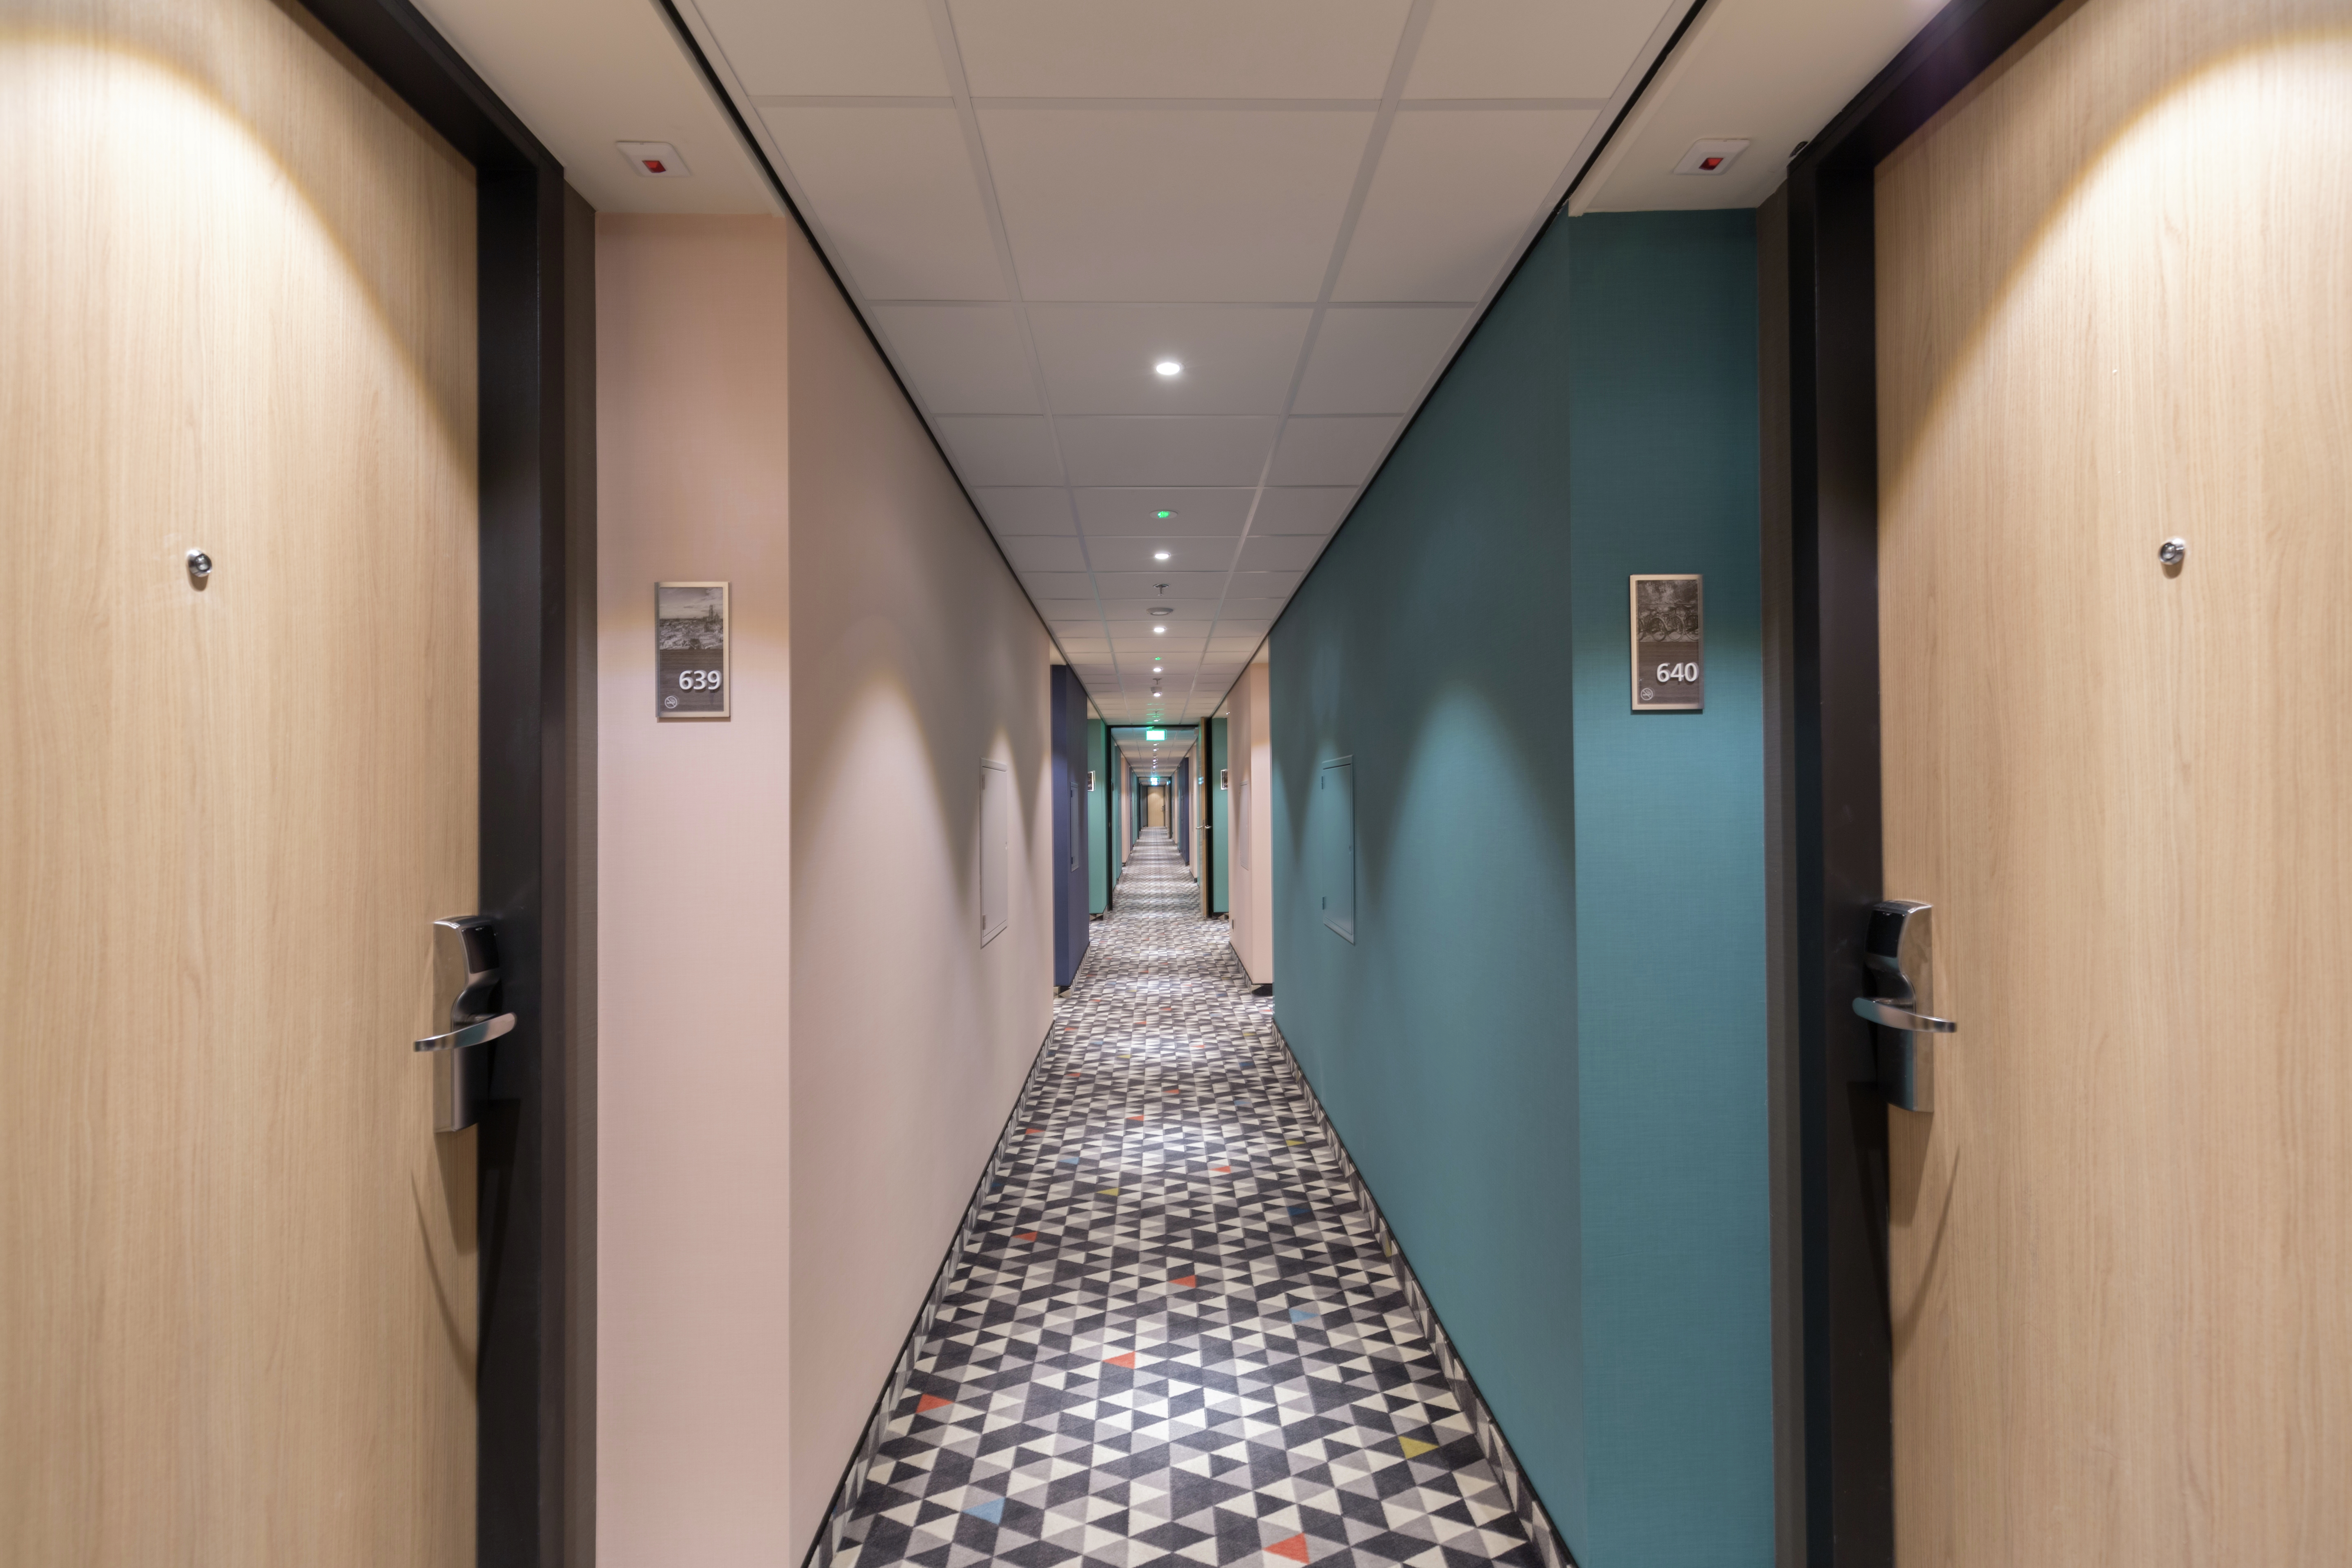 Hotel Hallway Area for Guestrooms